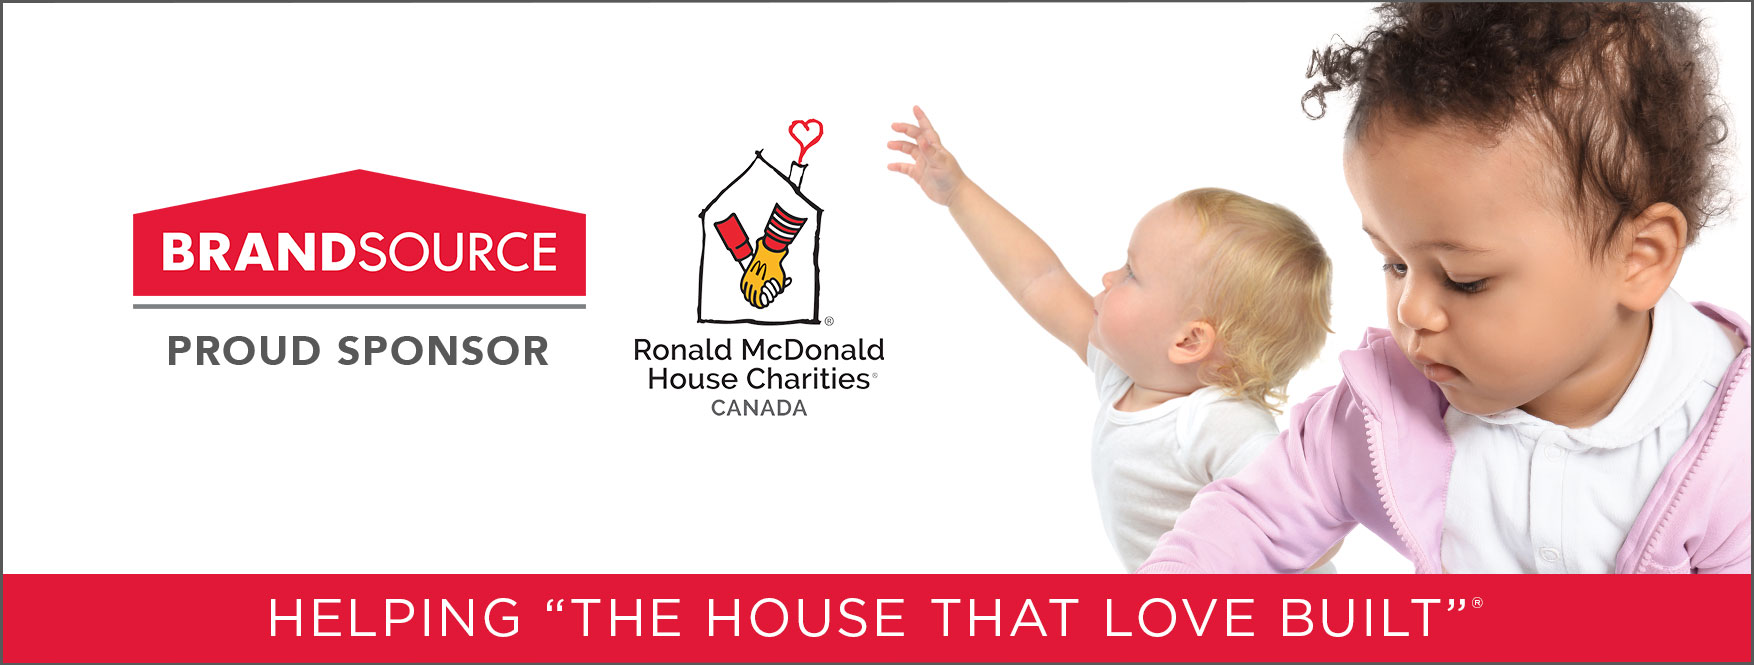 BrandSource Canada is a proud sponsor of Ronald McDonalds House Charities Canada